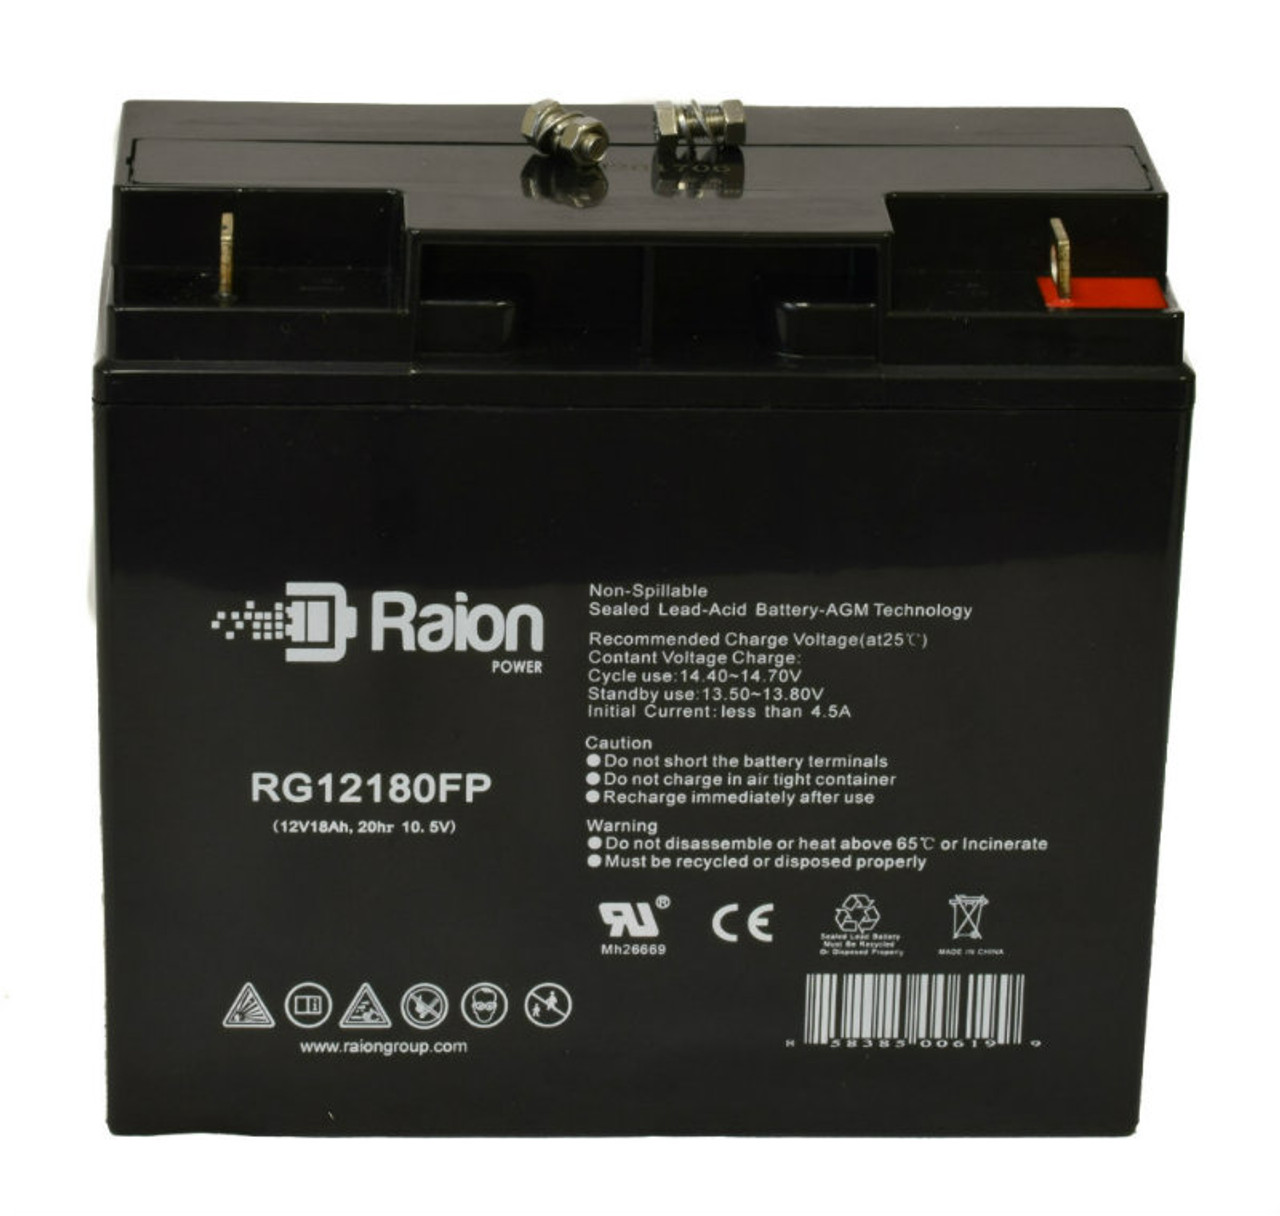 Raion Power RG12180FP 12V 18Ah Lead Acid Battery for Enerwatt WP20-12